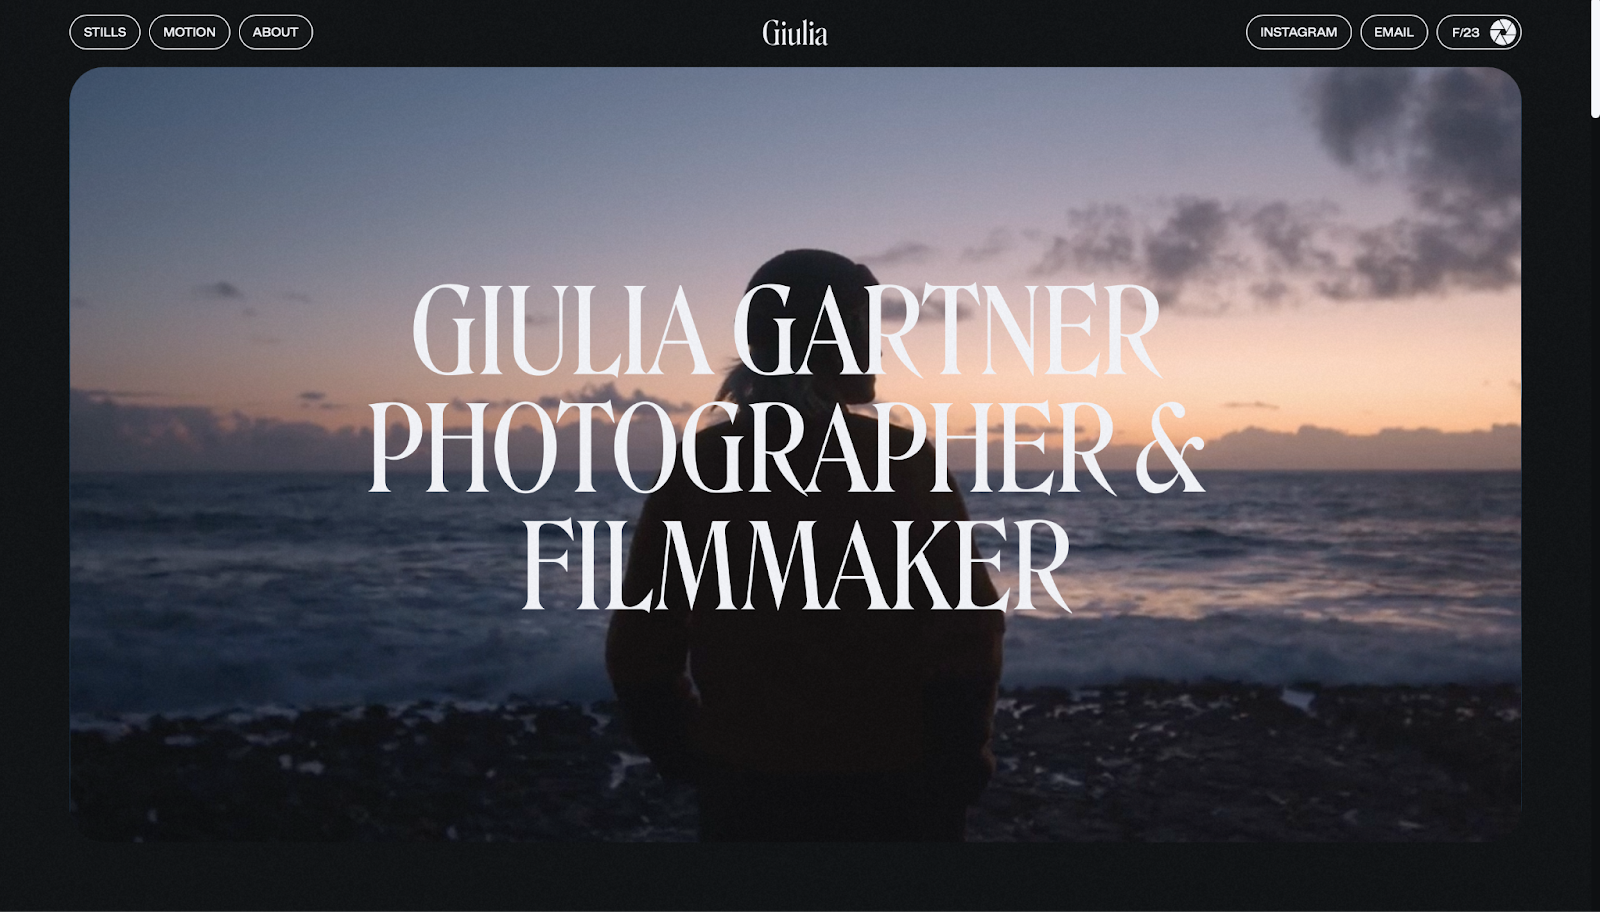 filmmaker website example, Giulia Gartner